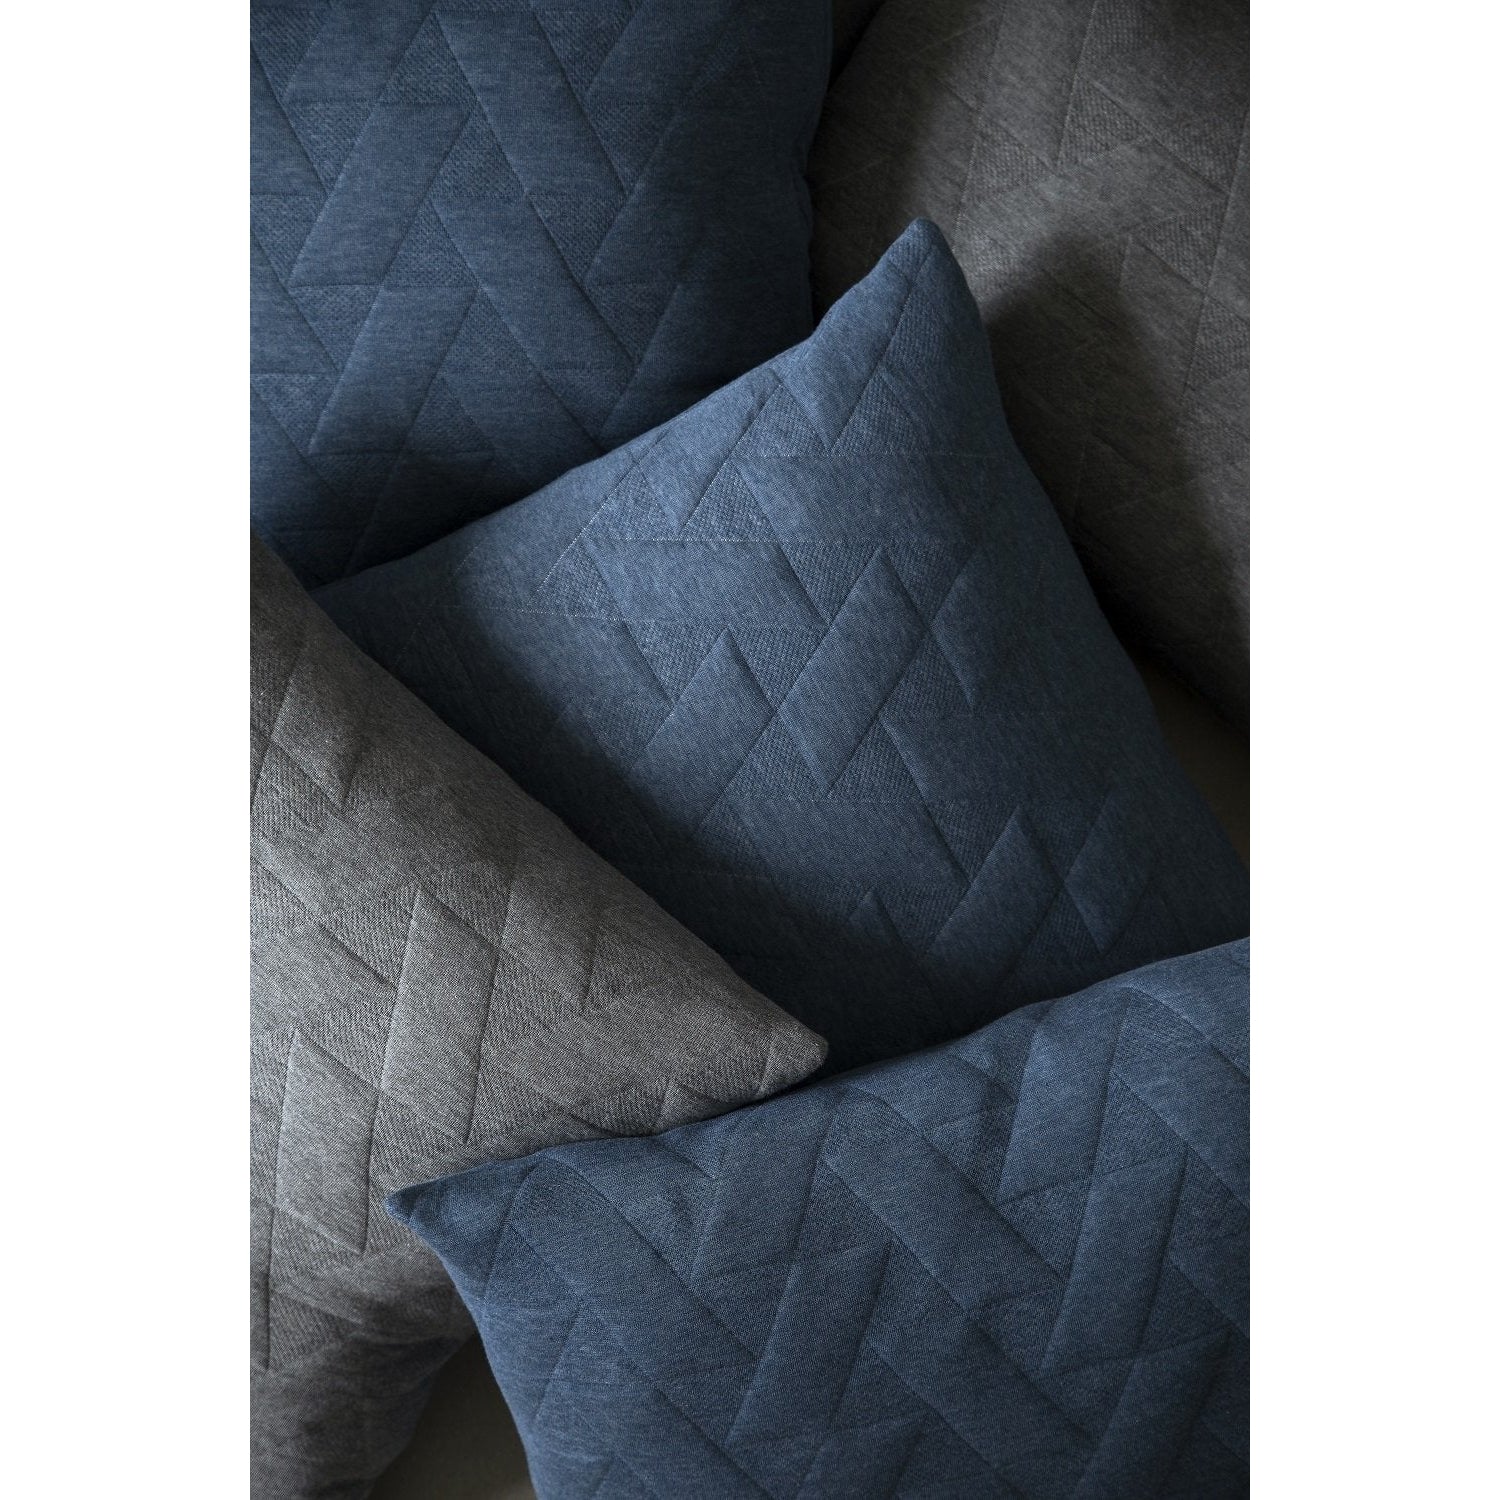 Architectmade Finn Juhl Pattern Cushion, šedá 40x60